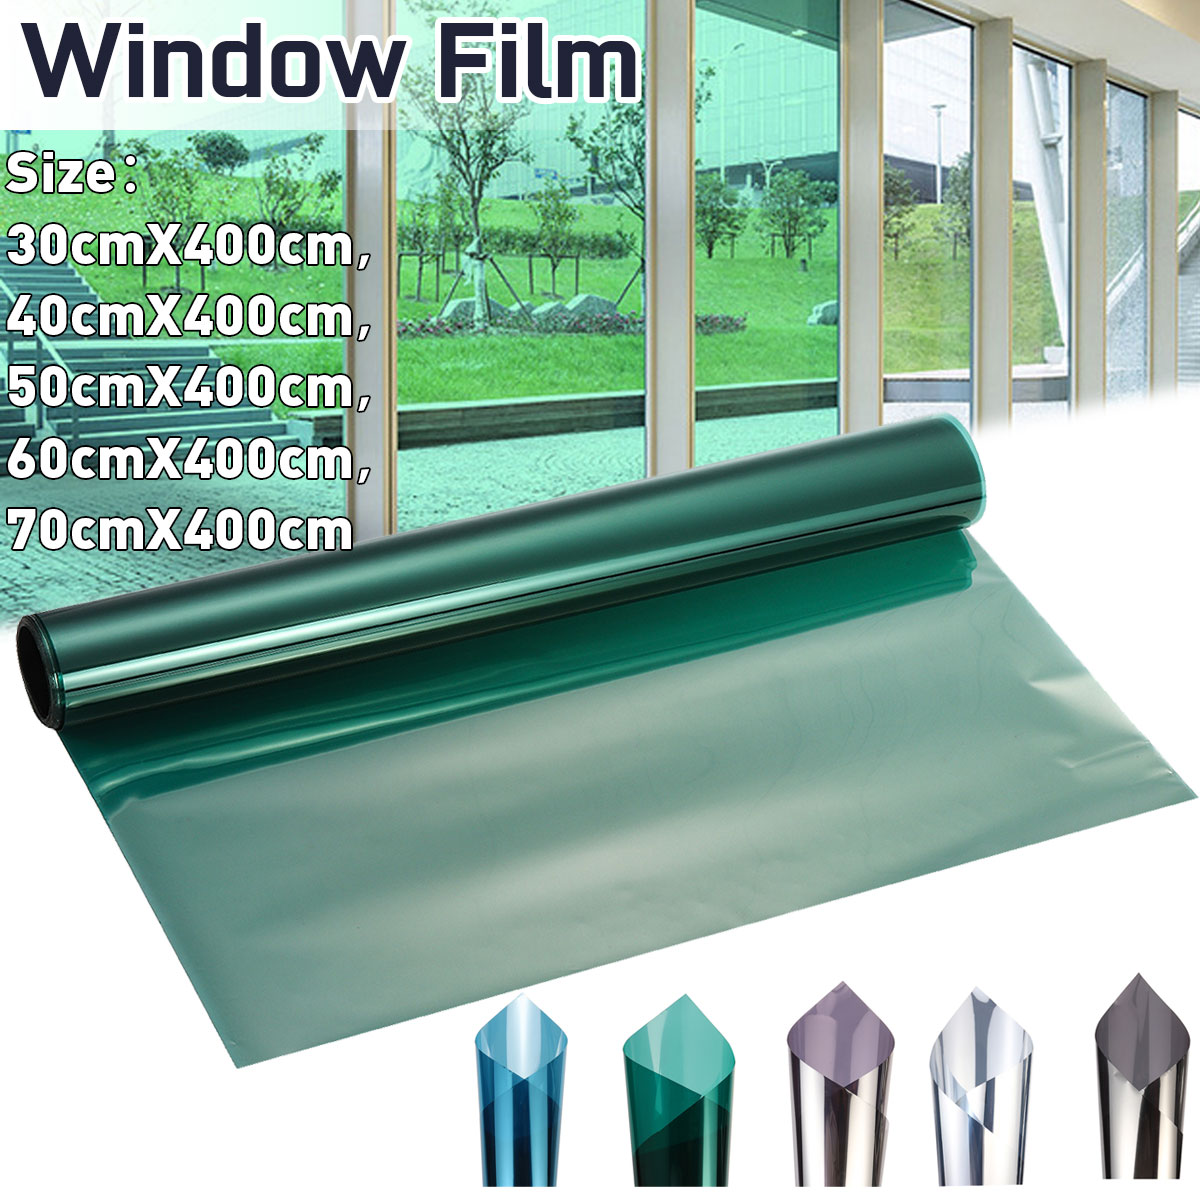 30/40/50/60/70x400CM One Way Mirror Window Film Vinyl Self-adhesive Reflective Solar film Privacy Glass Tint Window Stickers